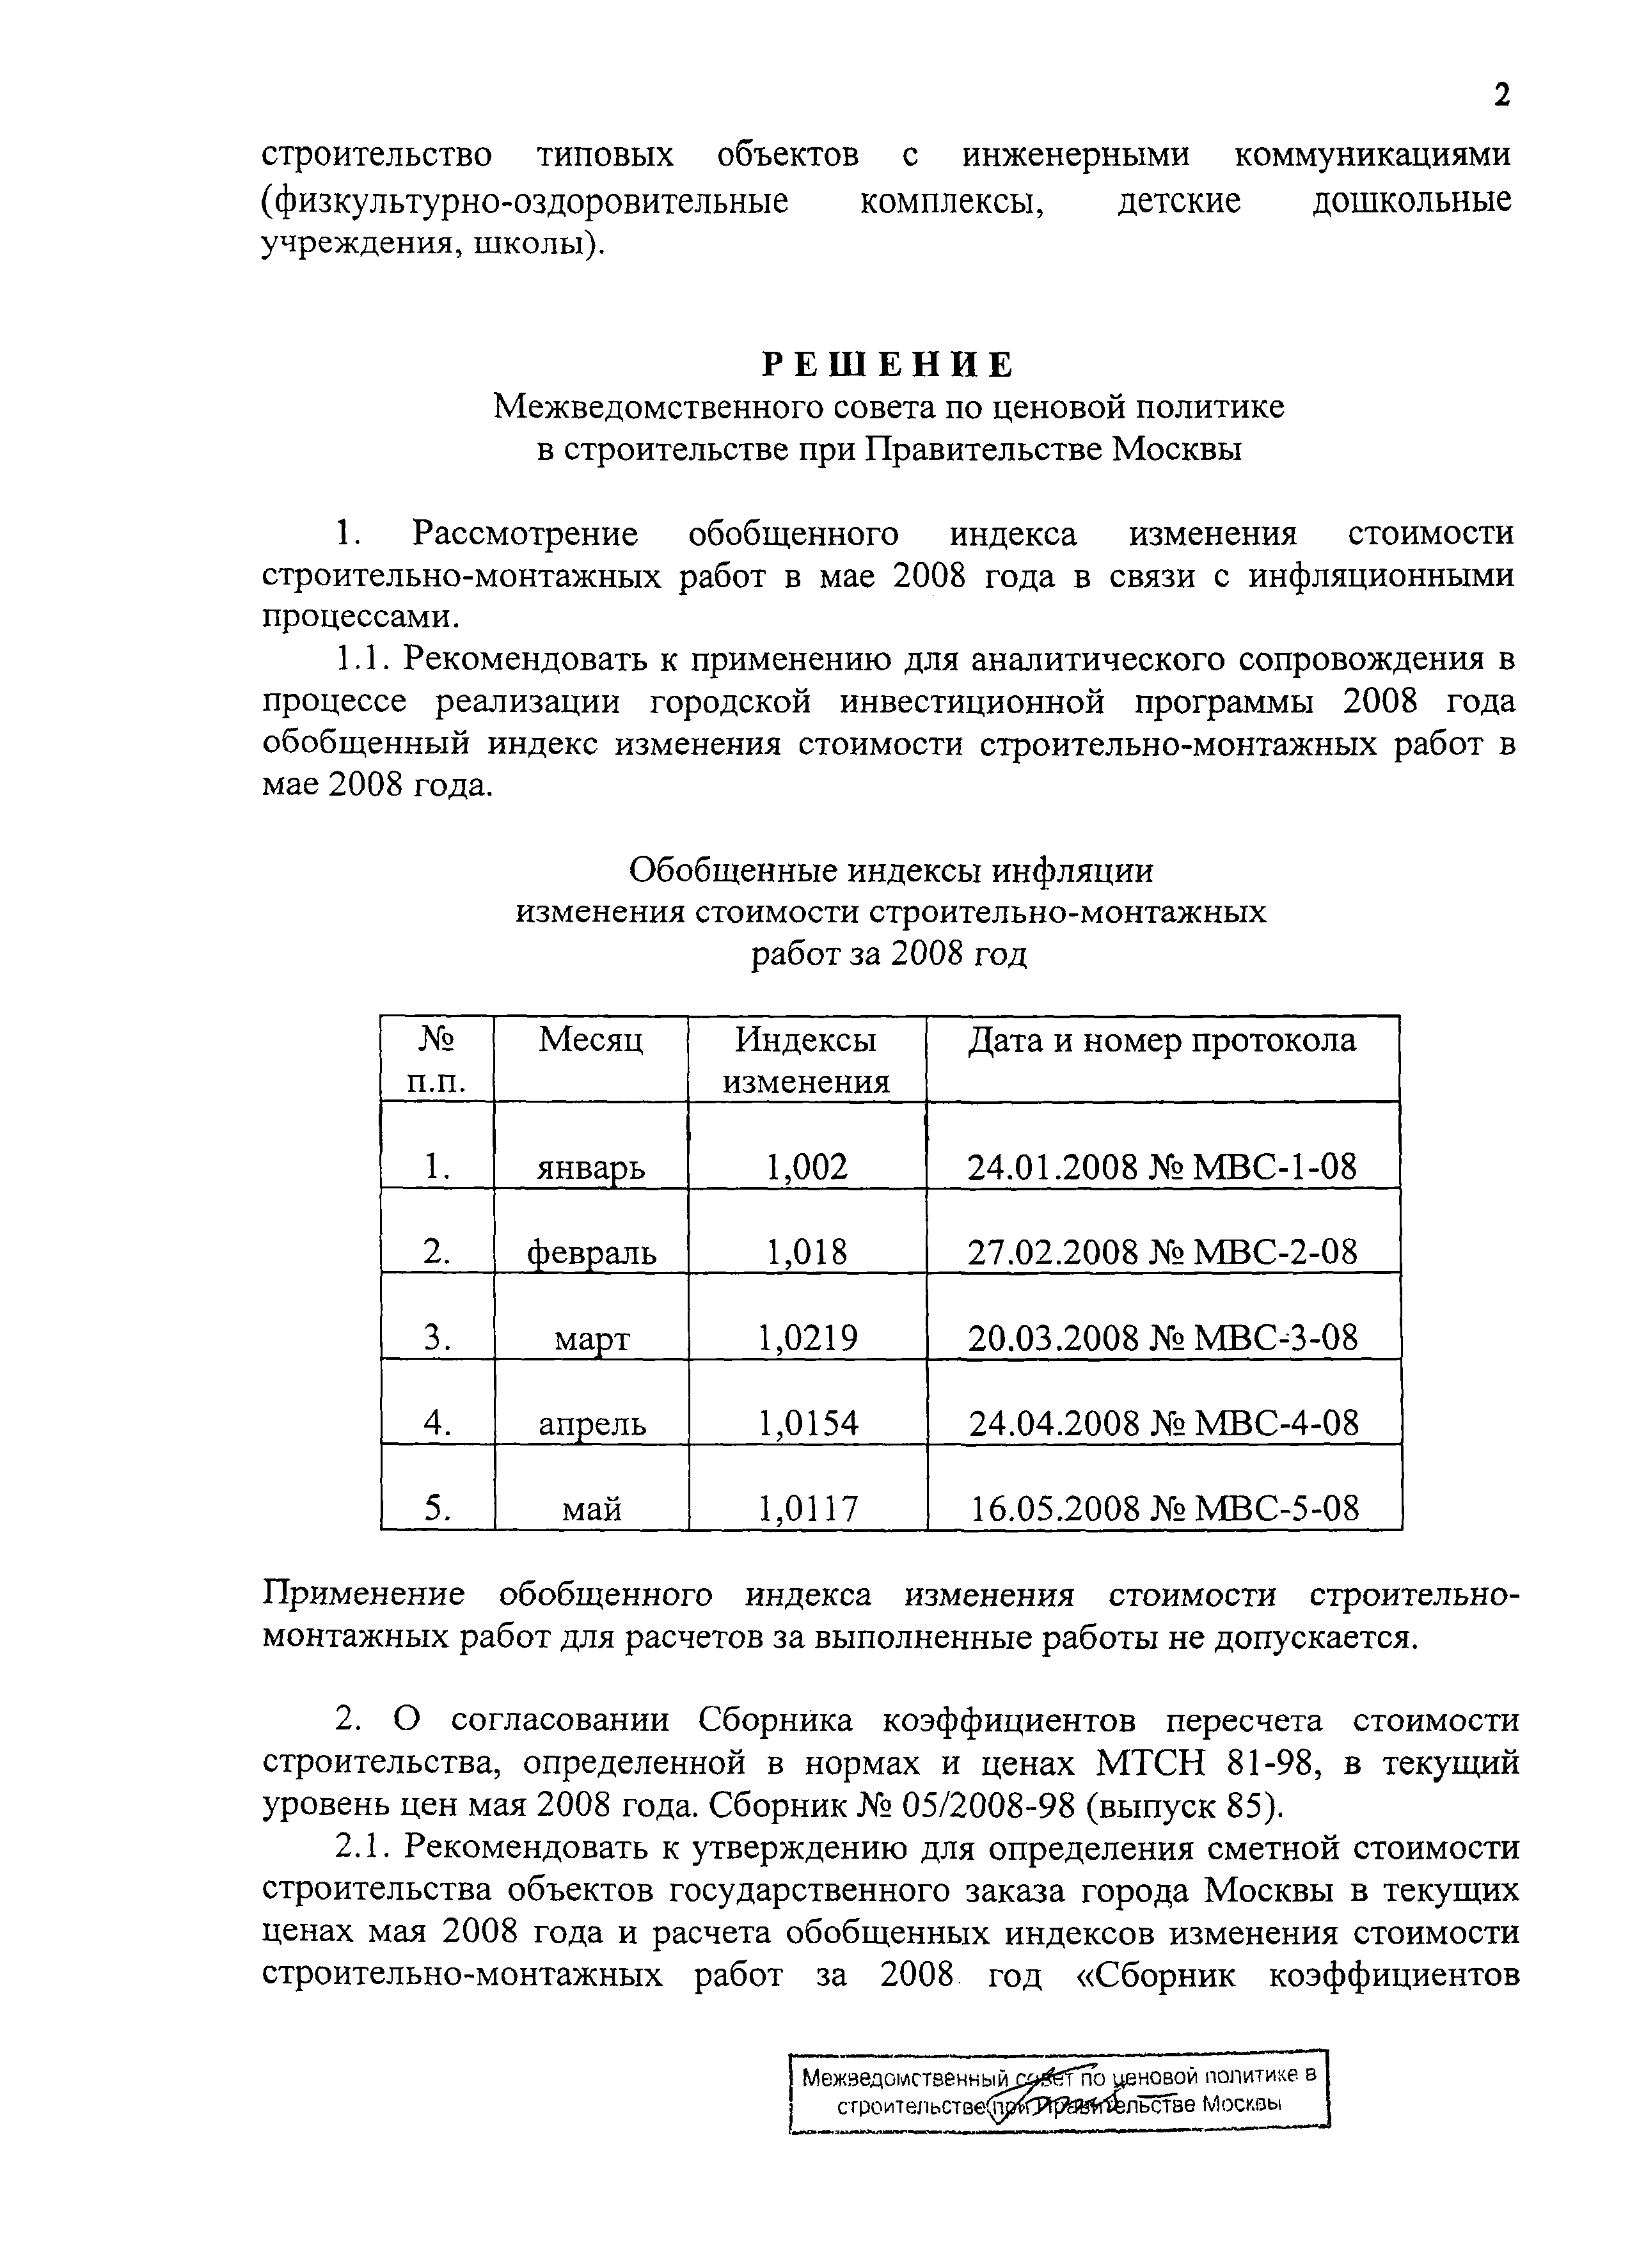 Протокол МВС-5-08